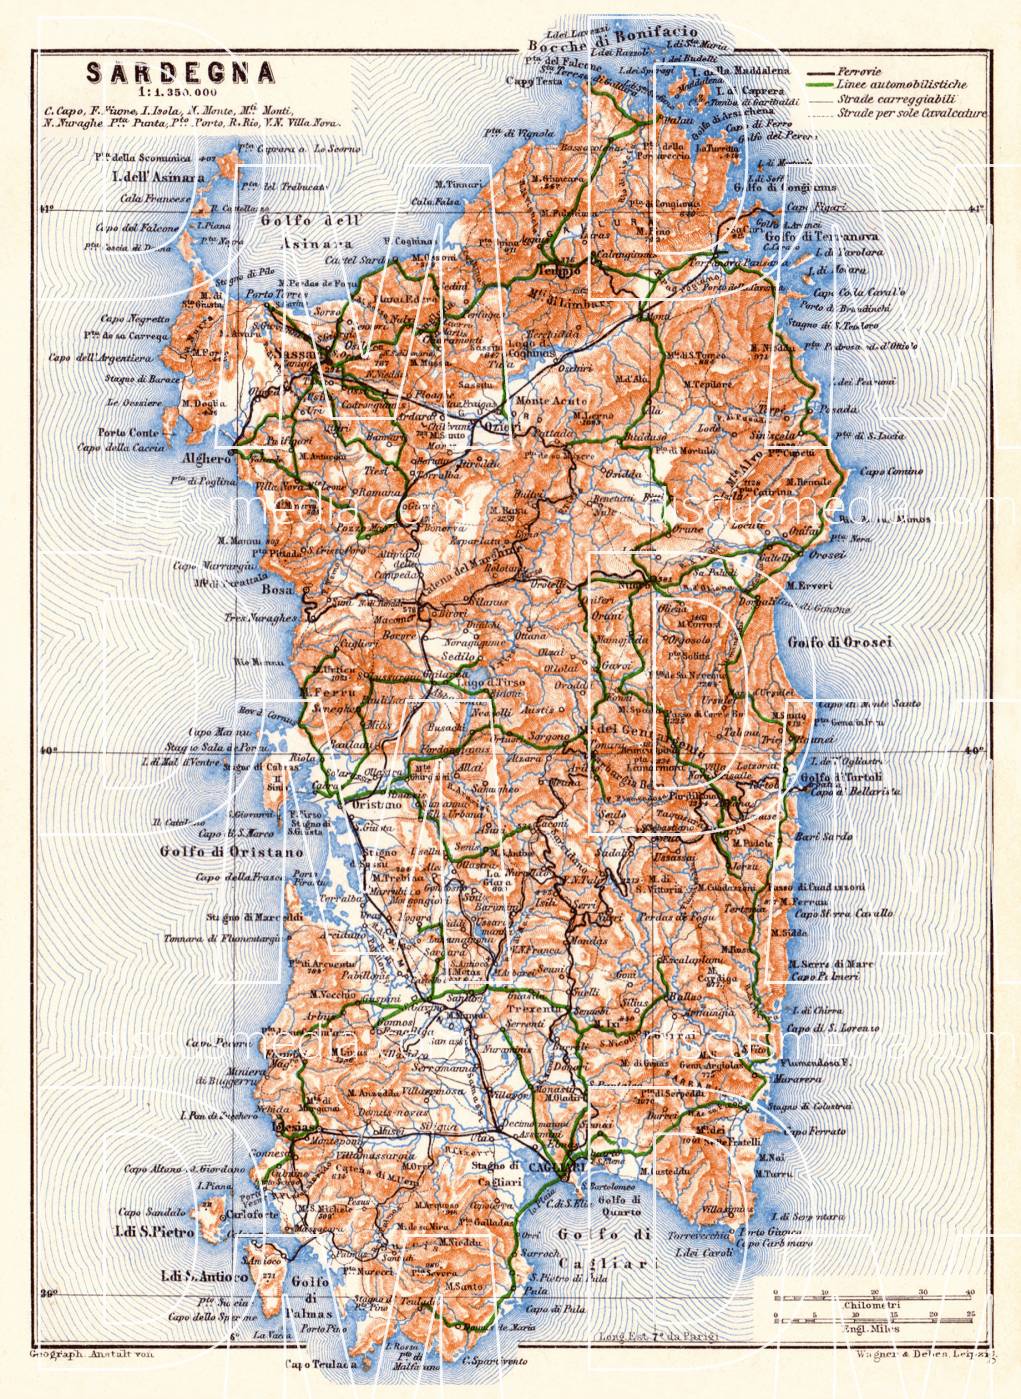 Old map of Sardinia (Sardegna) in 1929. Buy vintage map replica poster ...